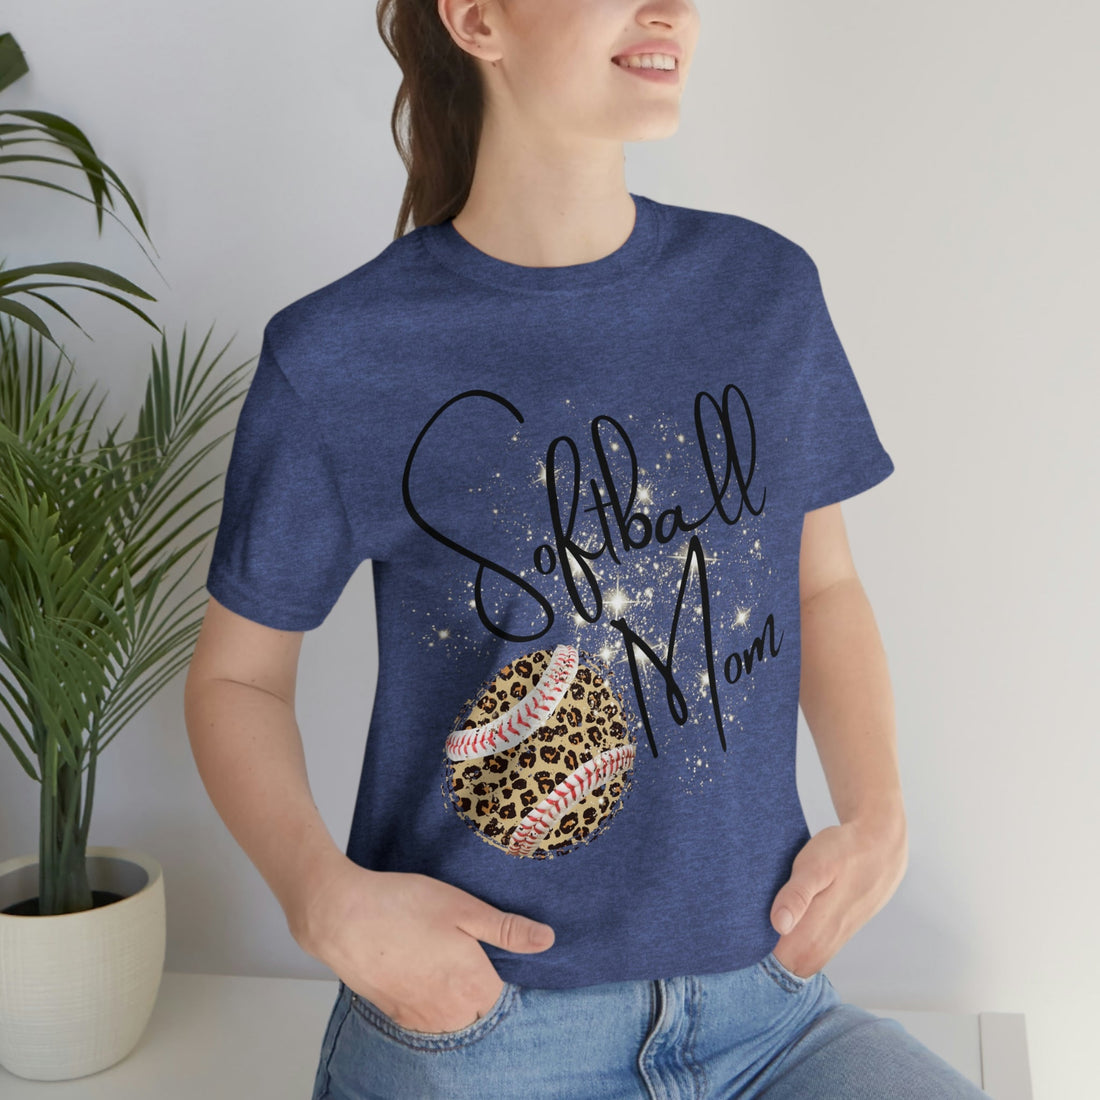 Softball MOM - T-Shirt - Positively Sassy - Softball MOM